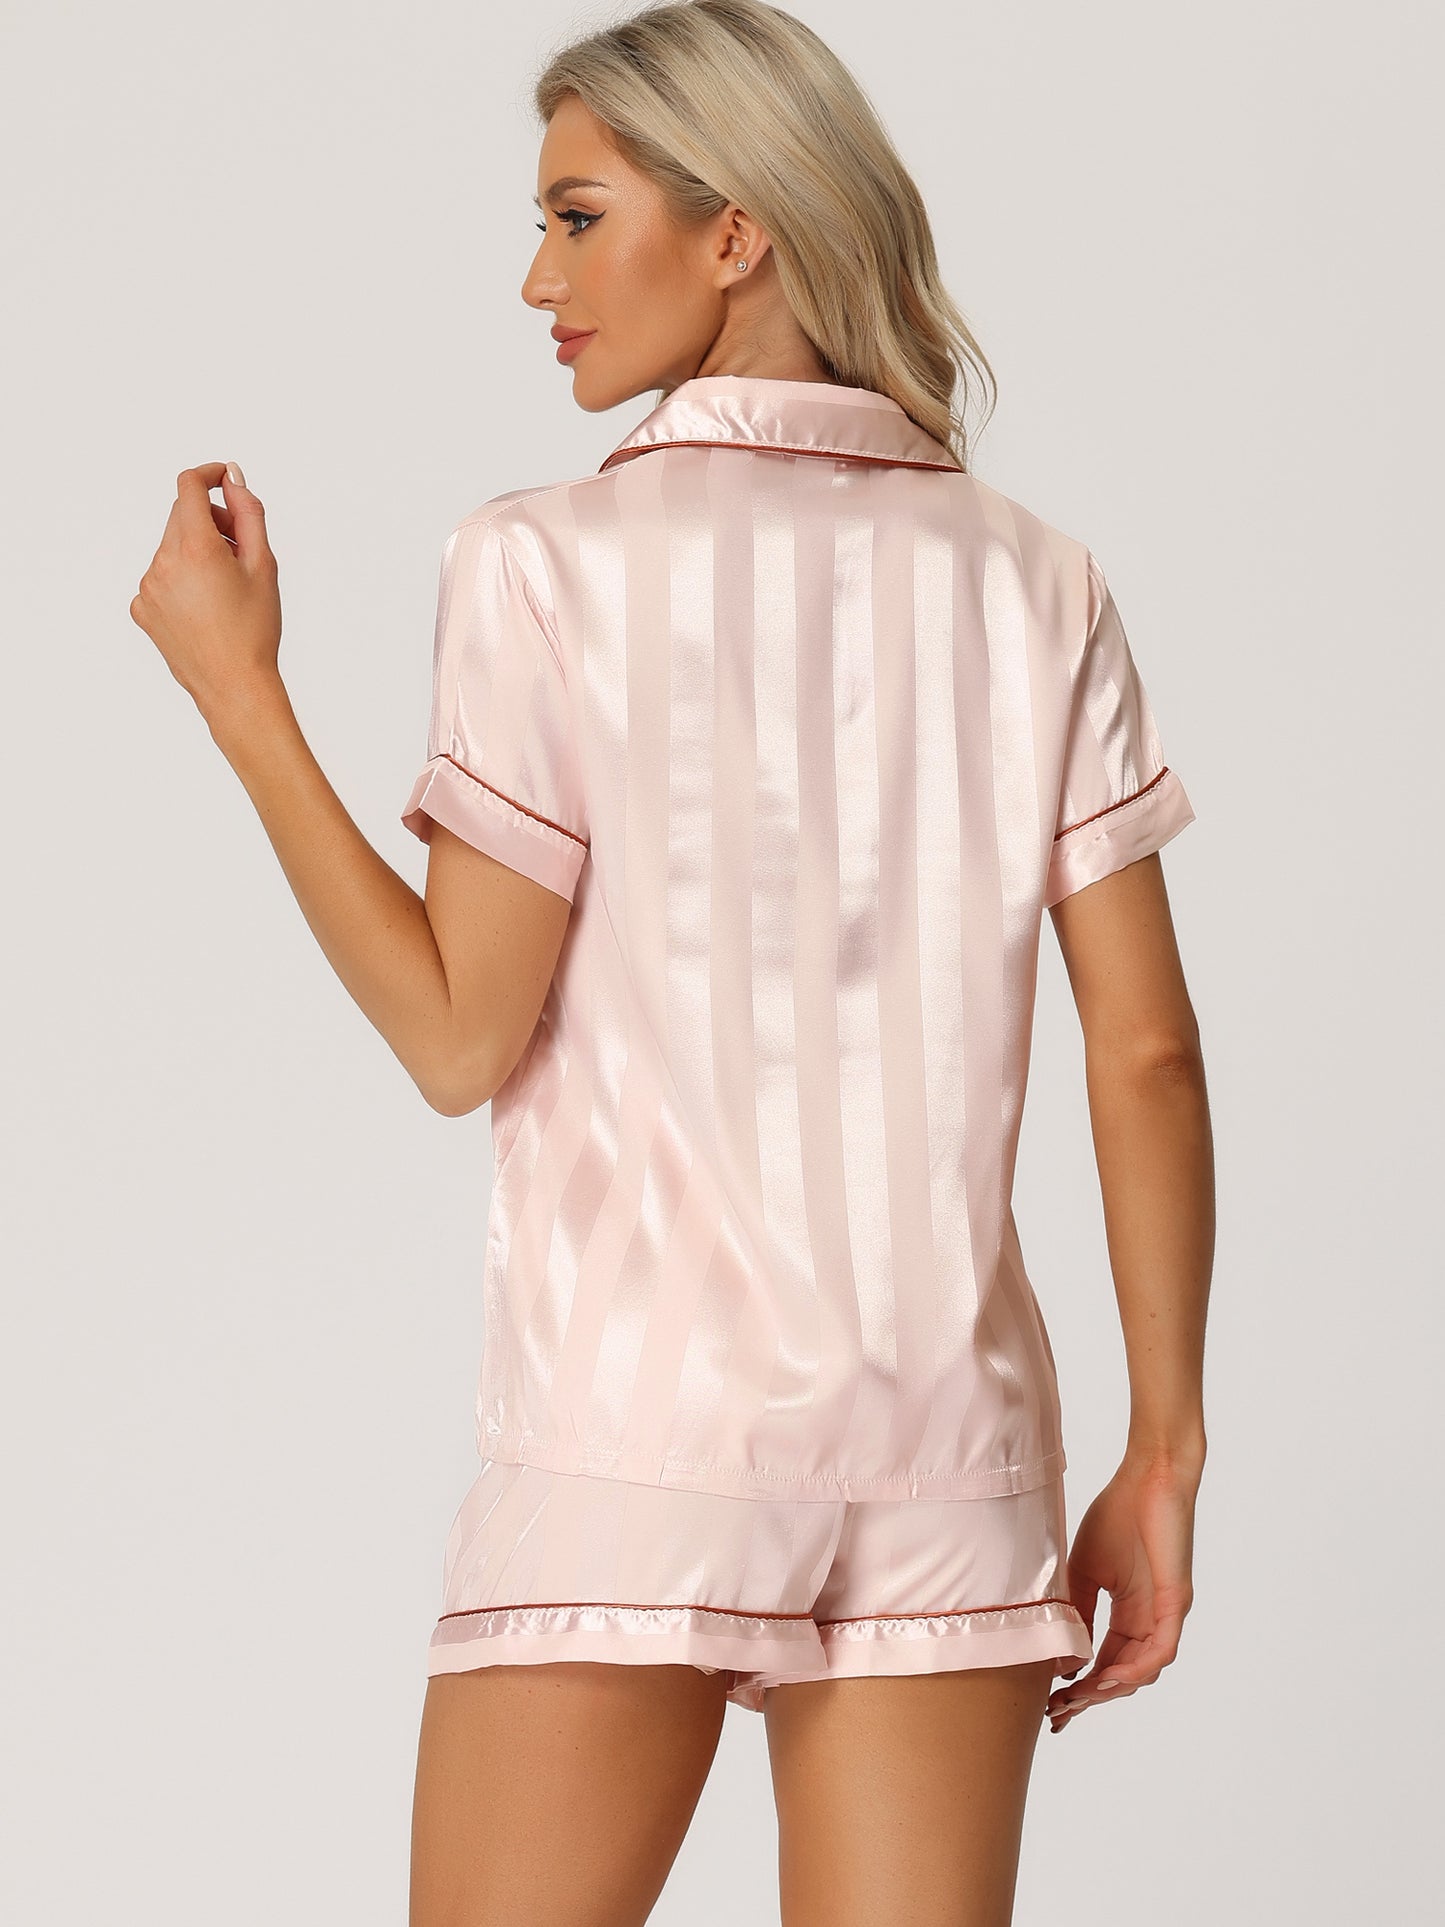 cheibear Satin 2pcs Lounge Sleepwear T-Shirt and Shorts Polka Dots Pajama Sets Light Pink